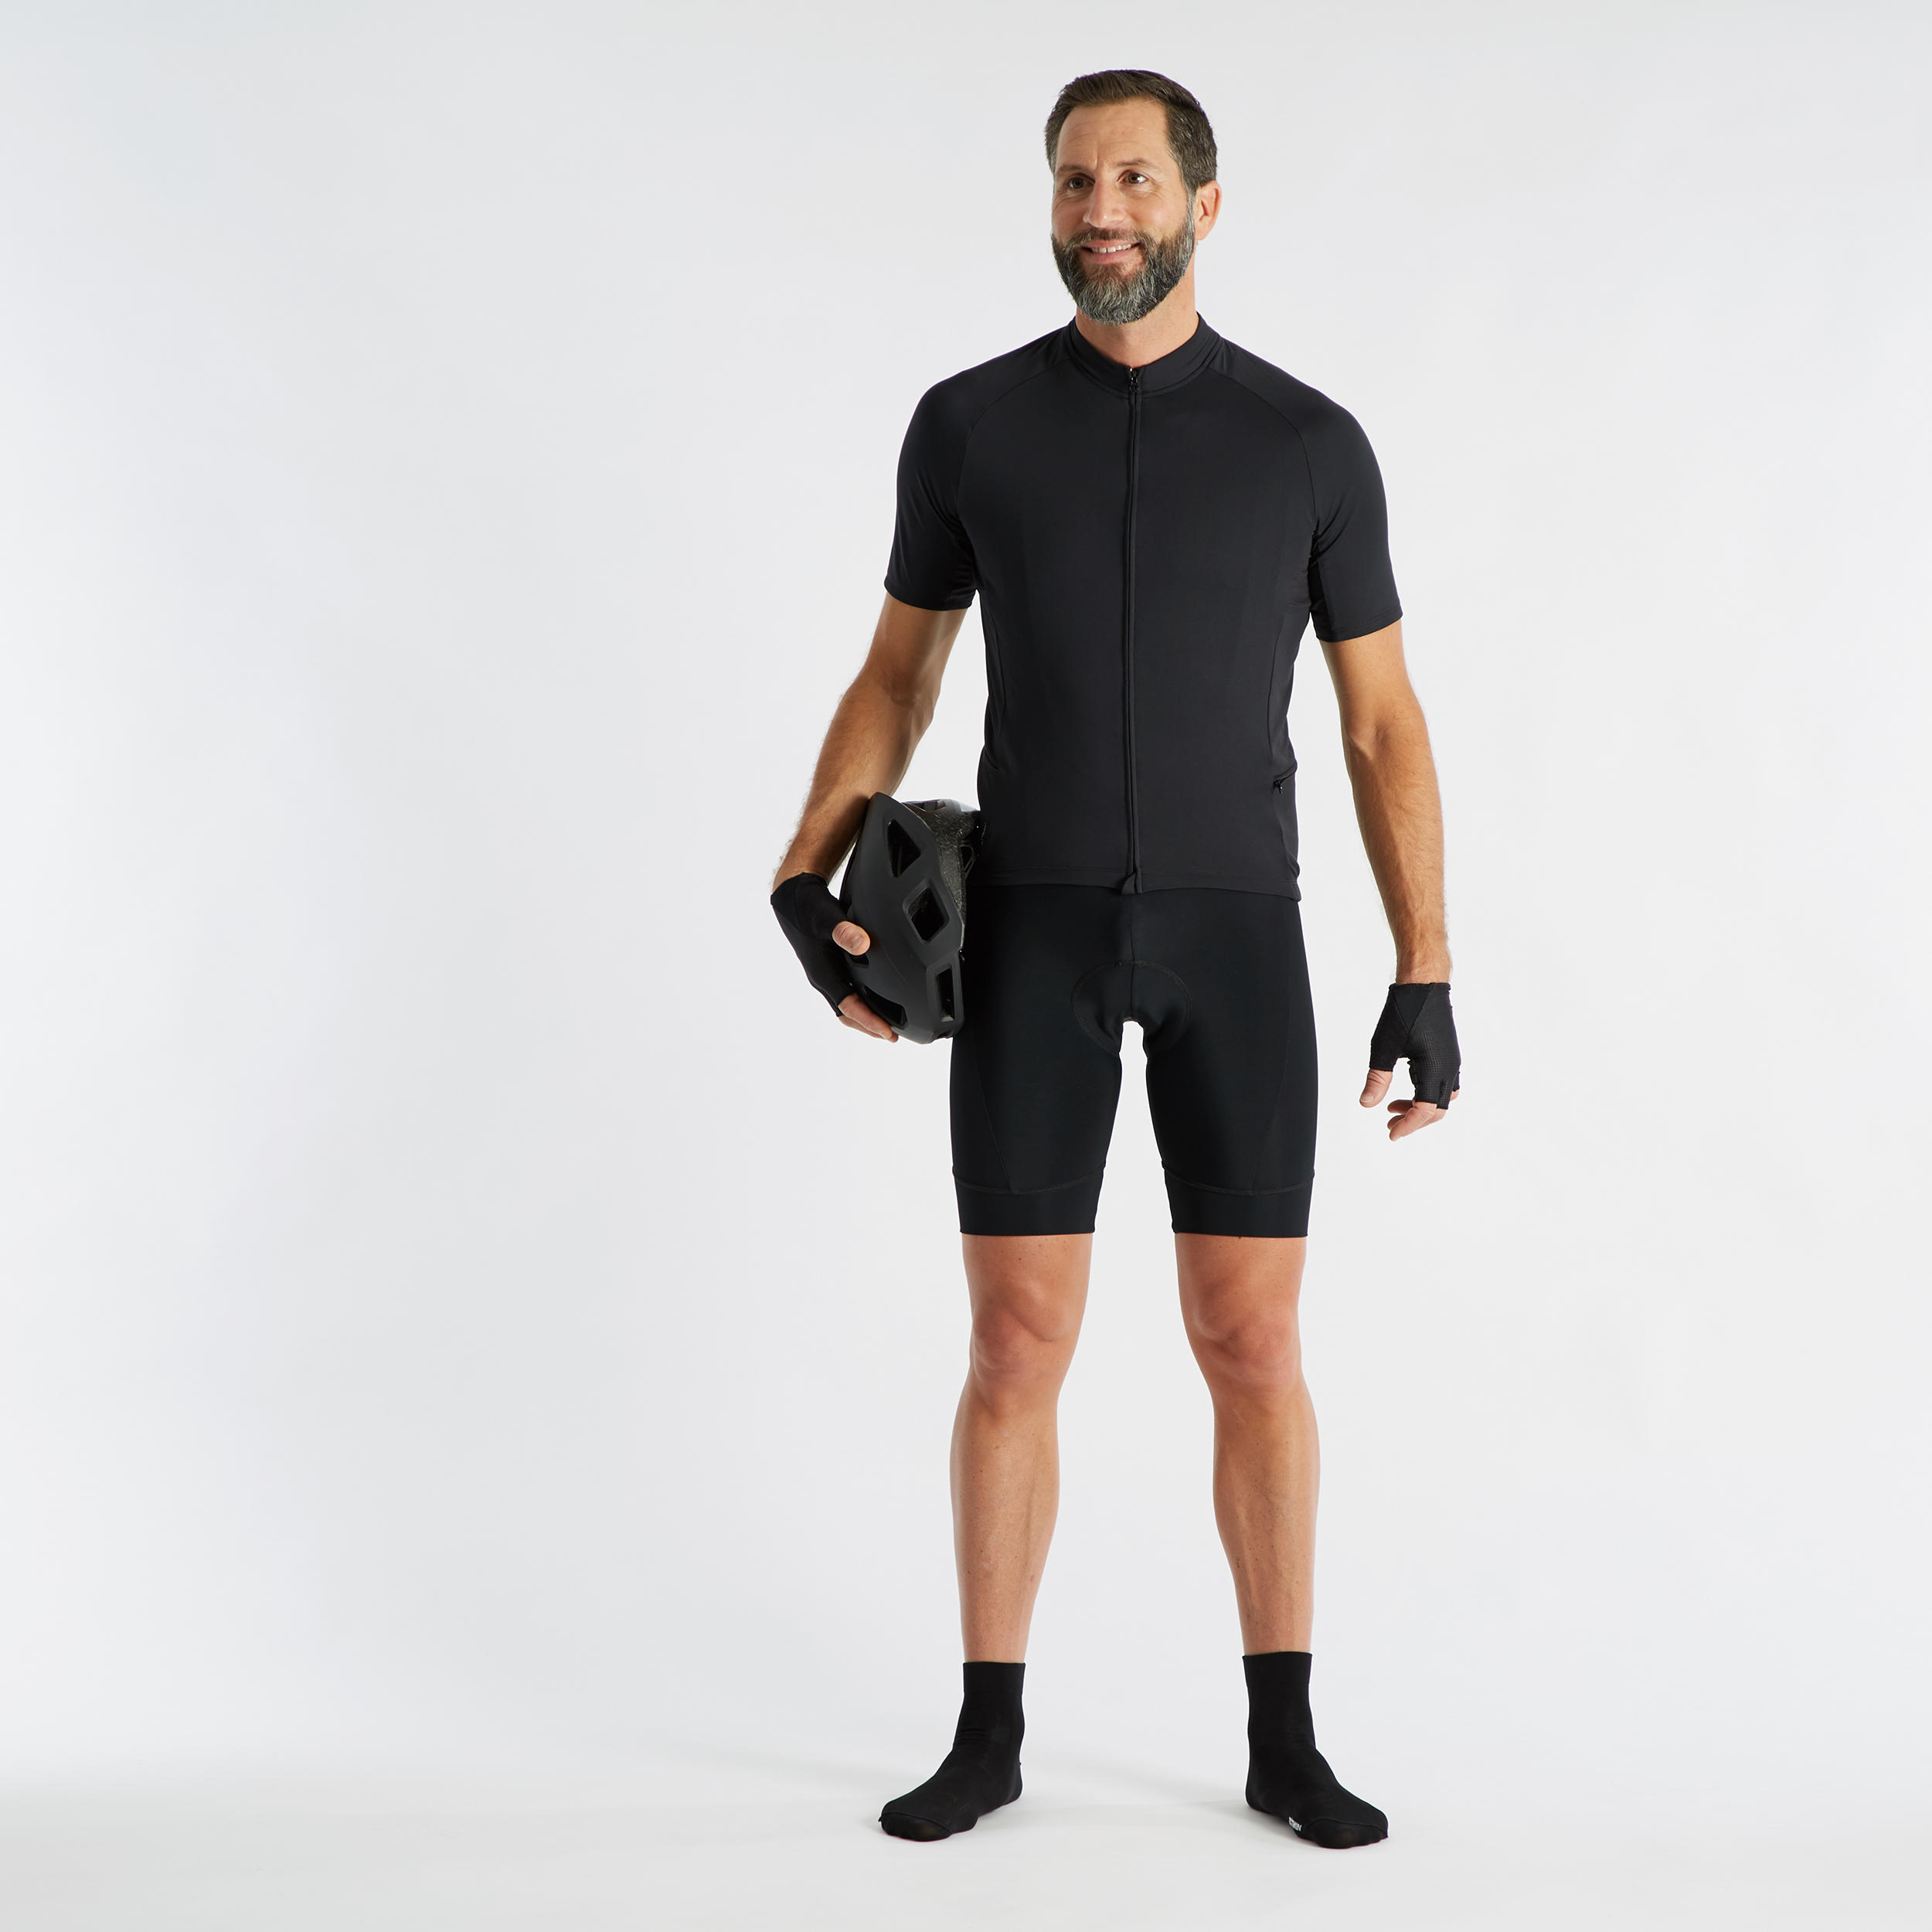 decathlon cycling shorts